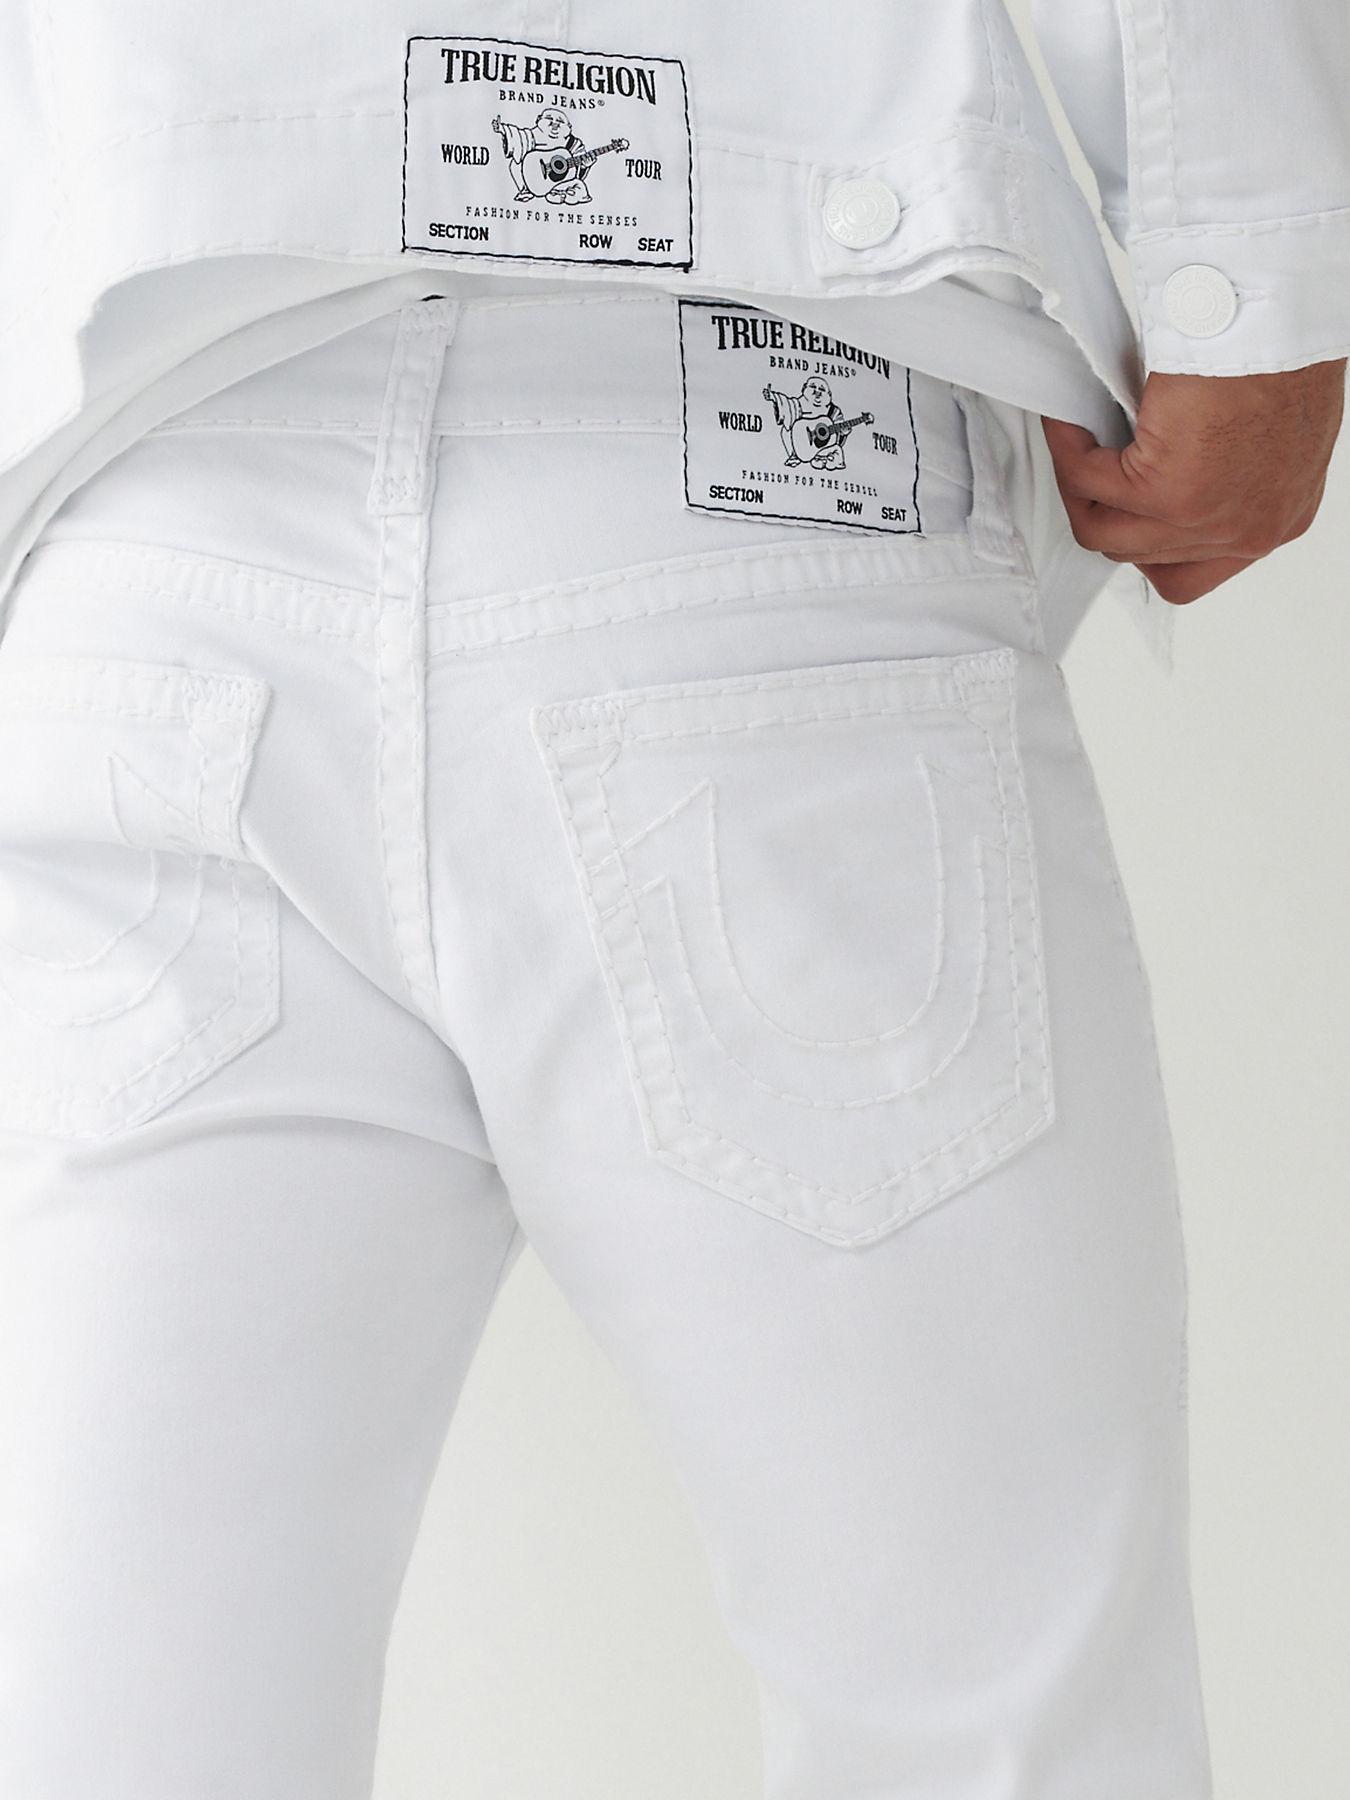 Mens White True Religion Jeans Shop  wwwillvacom 1692764174